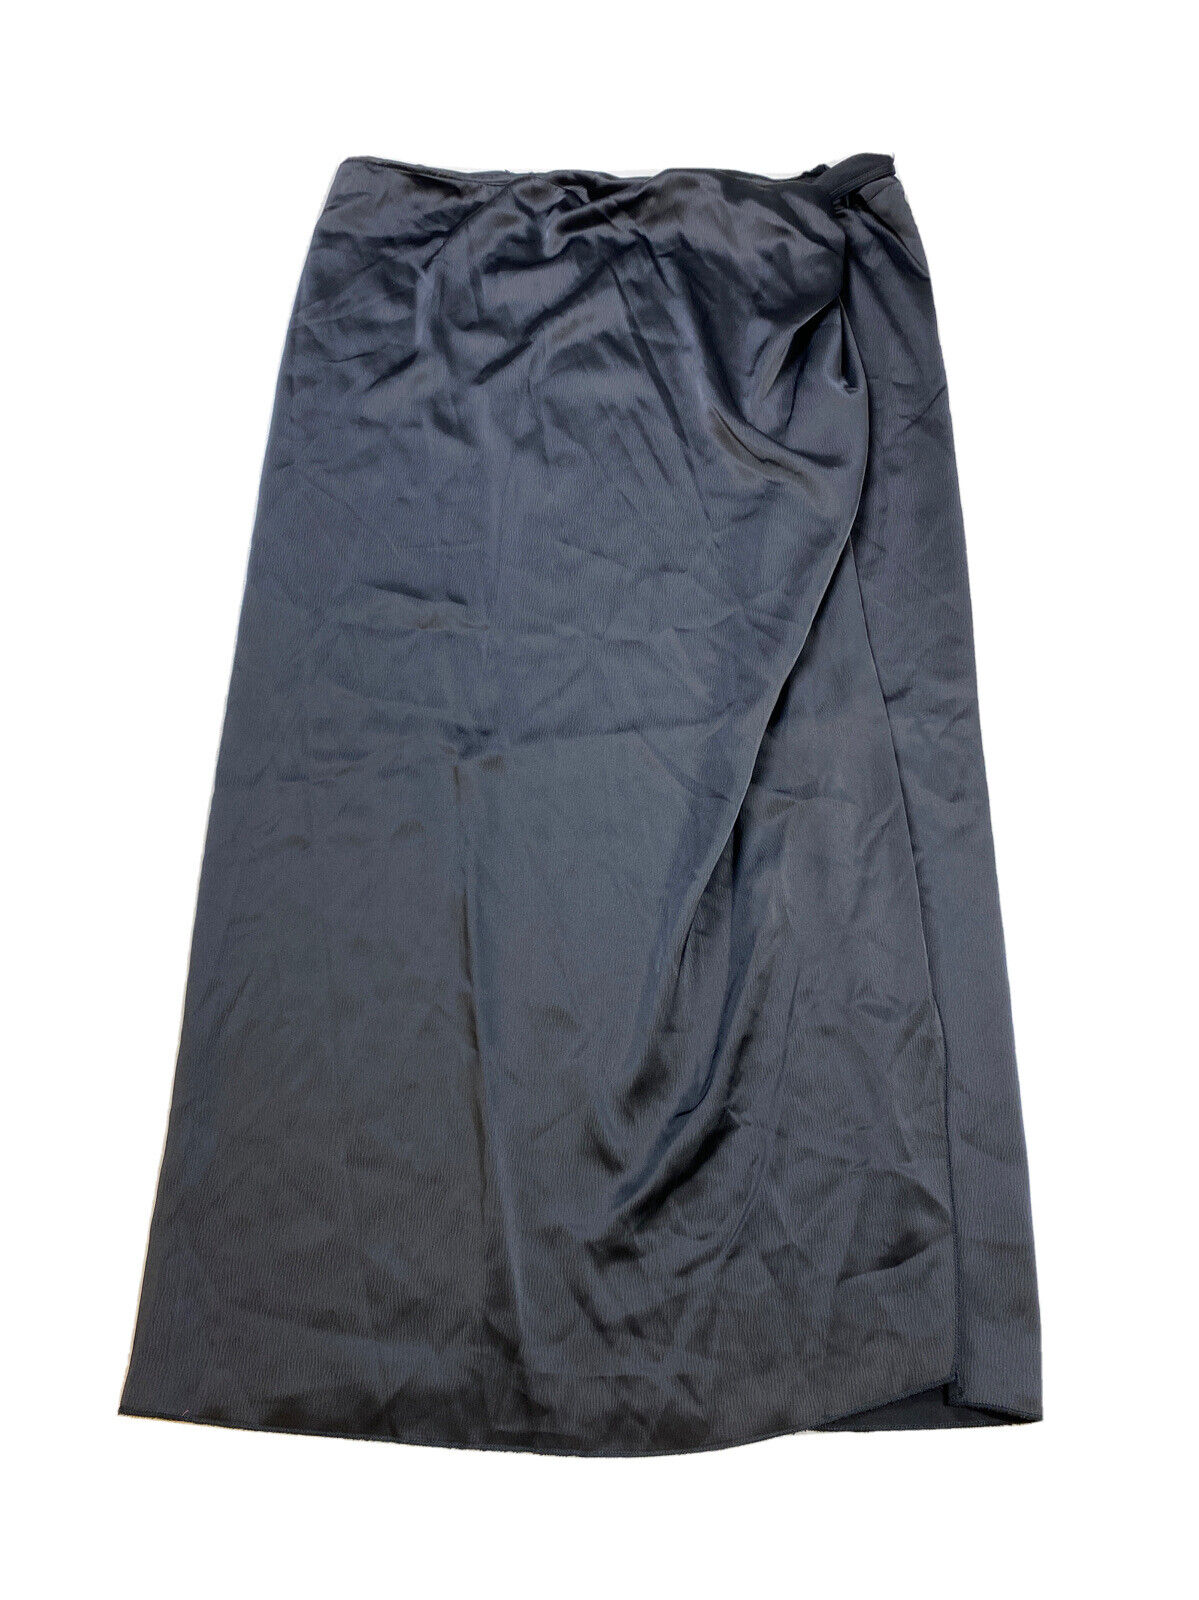 WAYF Women's Black Slit Leg Faux Wrap Below Knee Skirt - XL